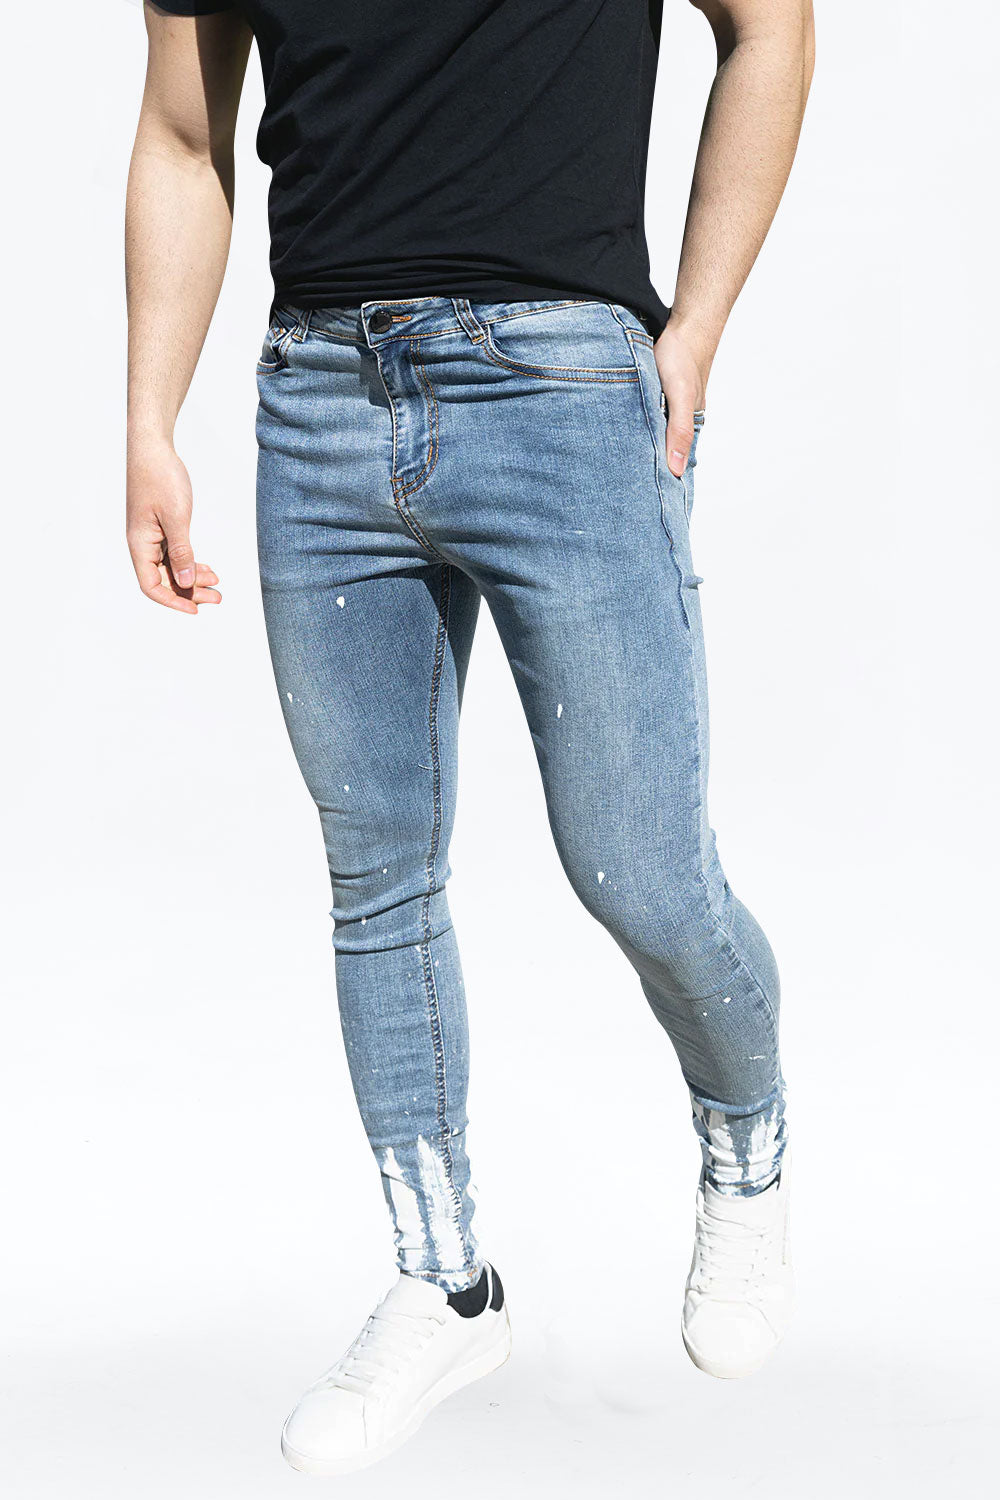 Gingtto Fashion Custom Wave Point Jeans Light Blue Skinny Jeans